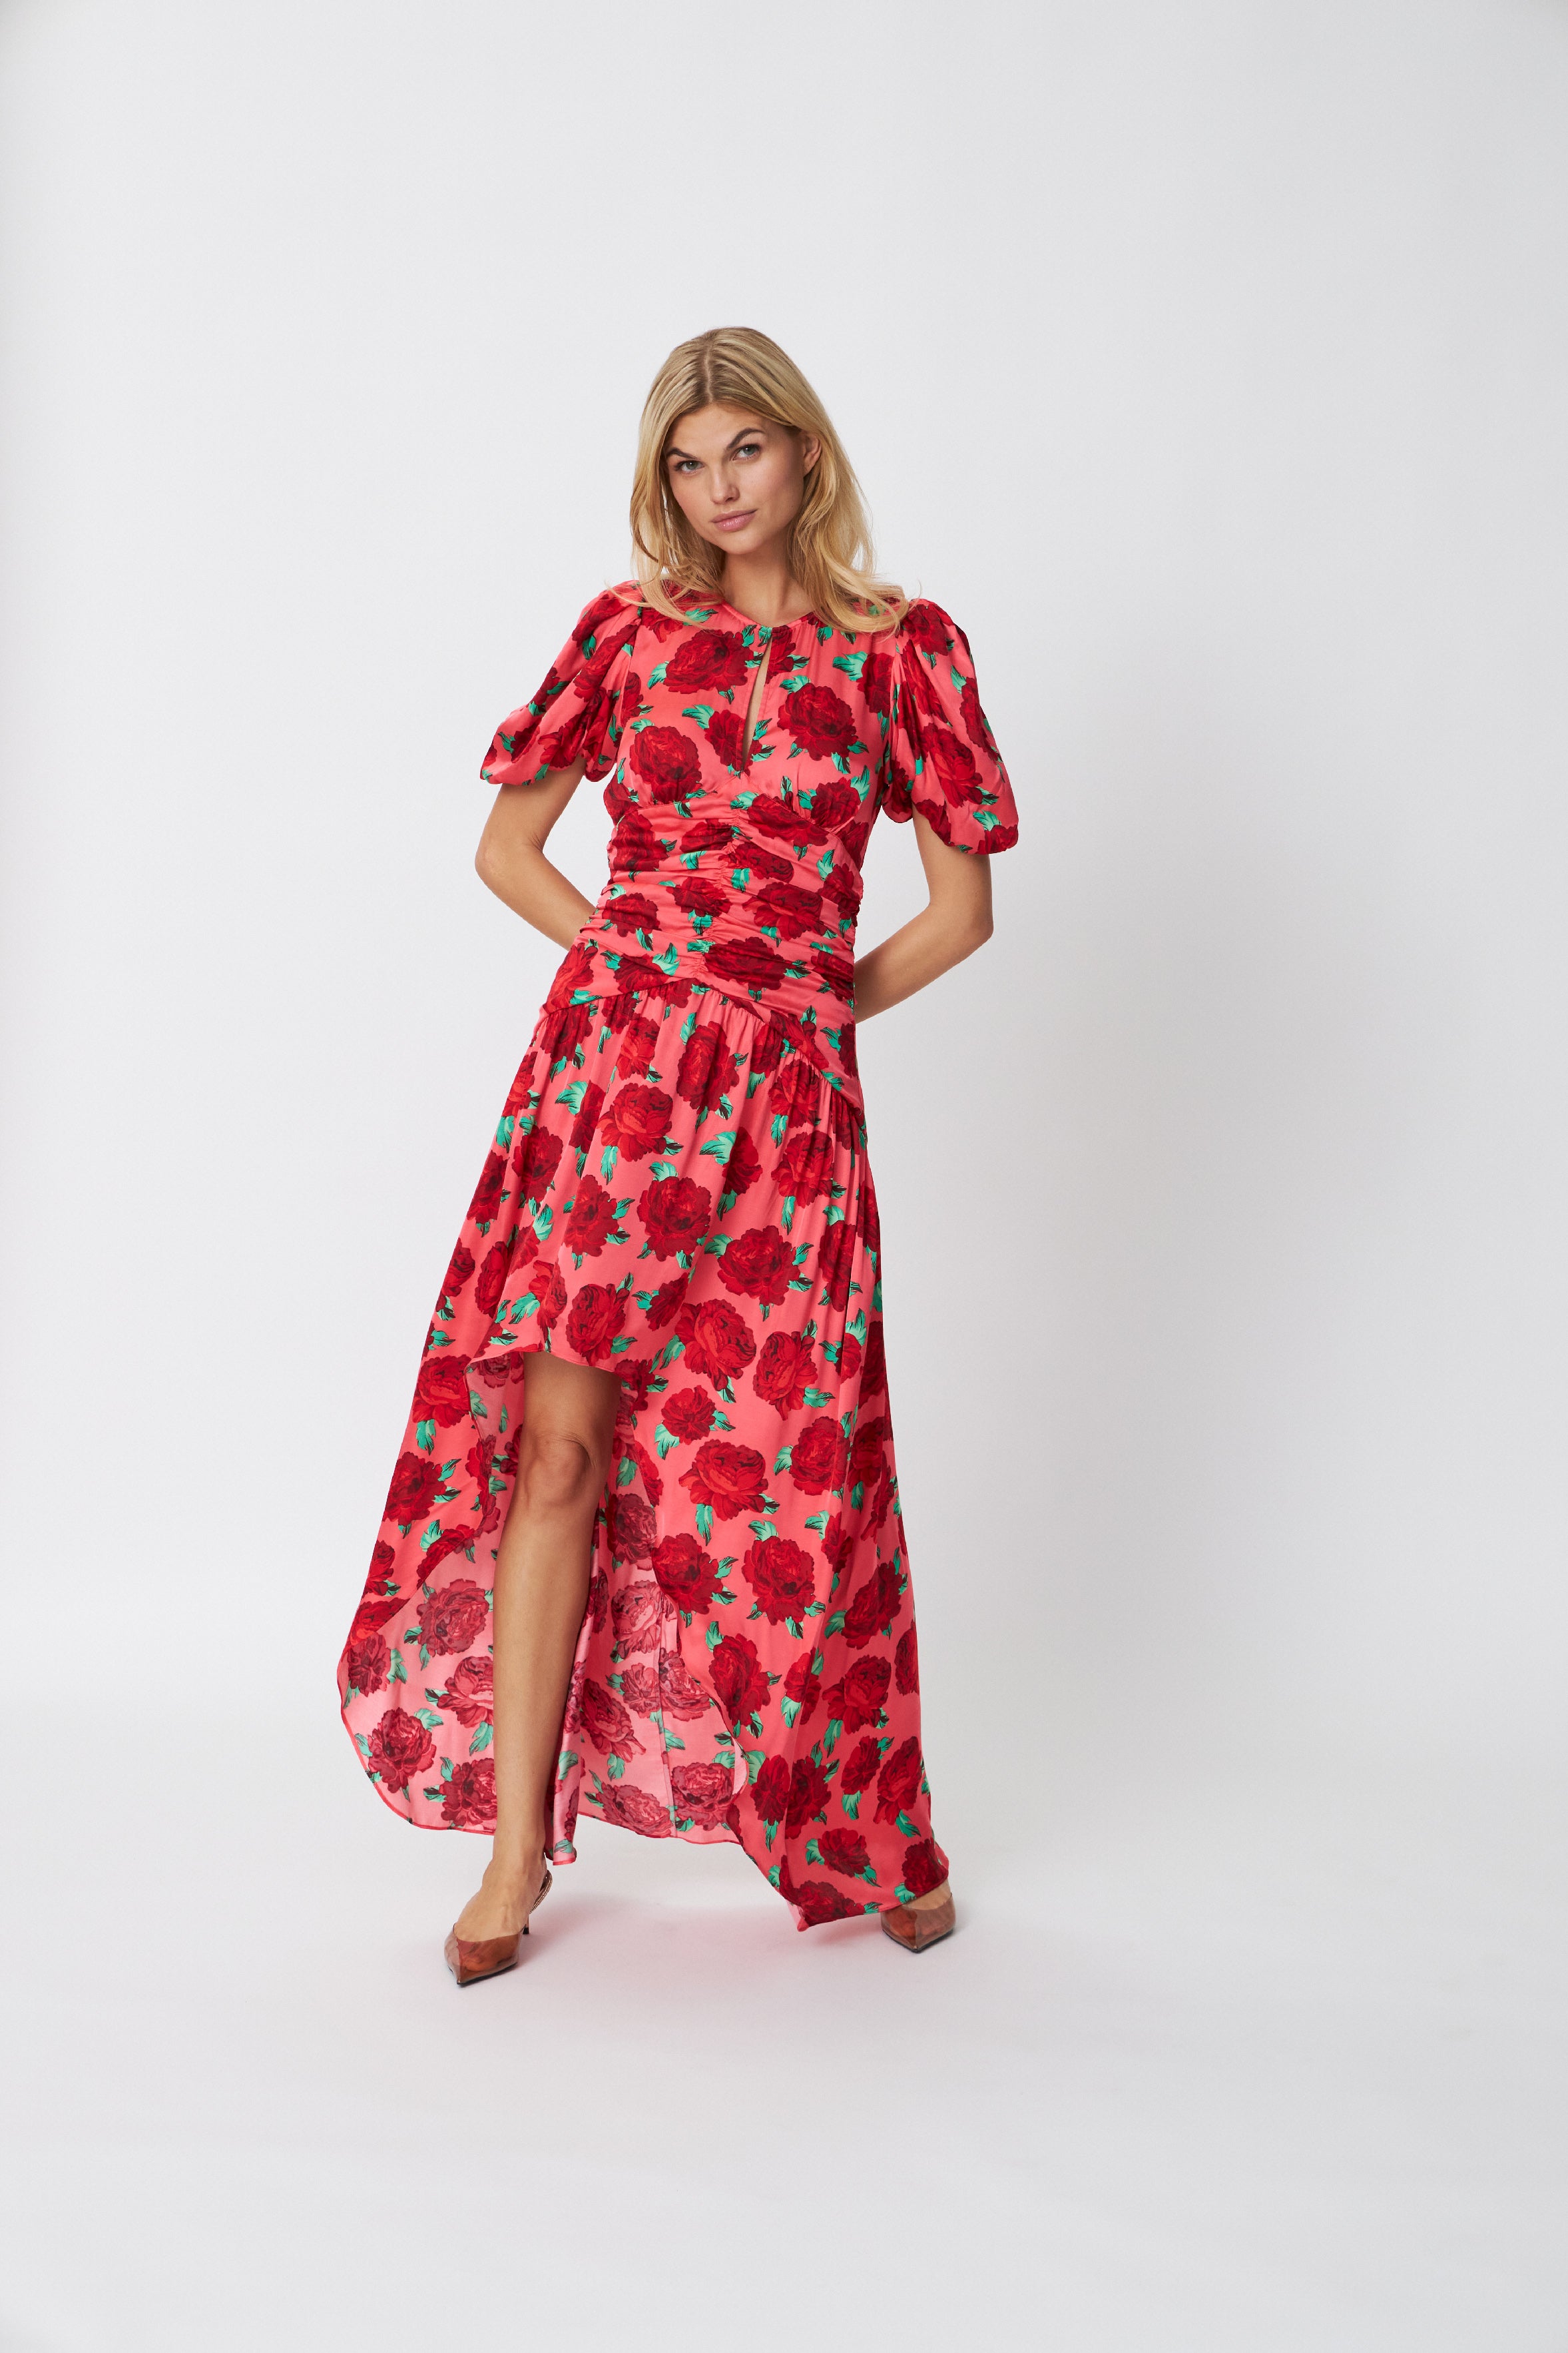 CRAS Elaine Dress Dress 8019 Coral Roses